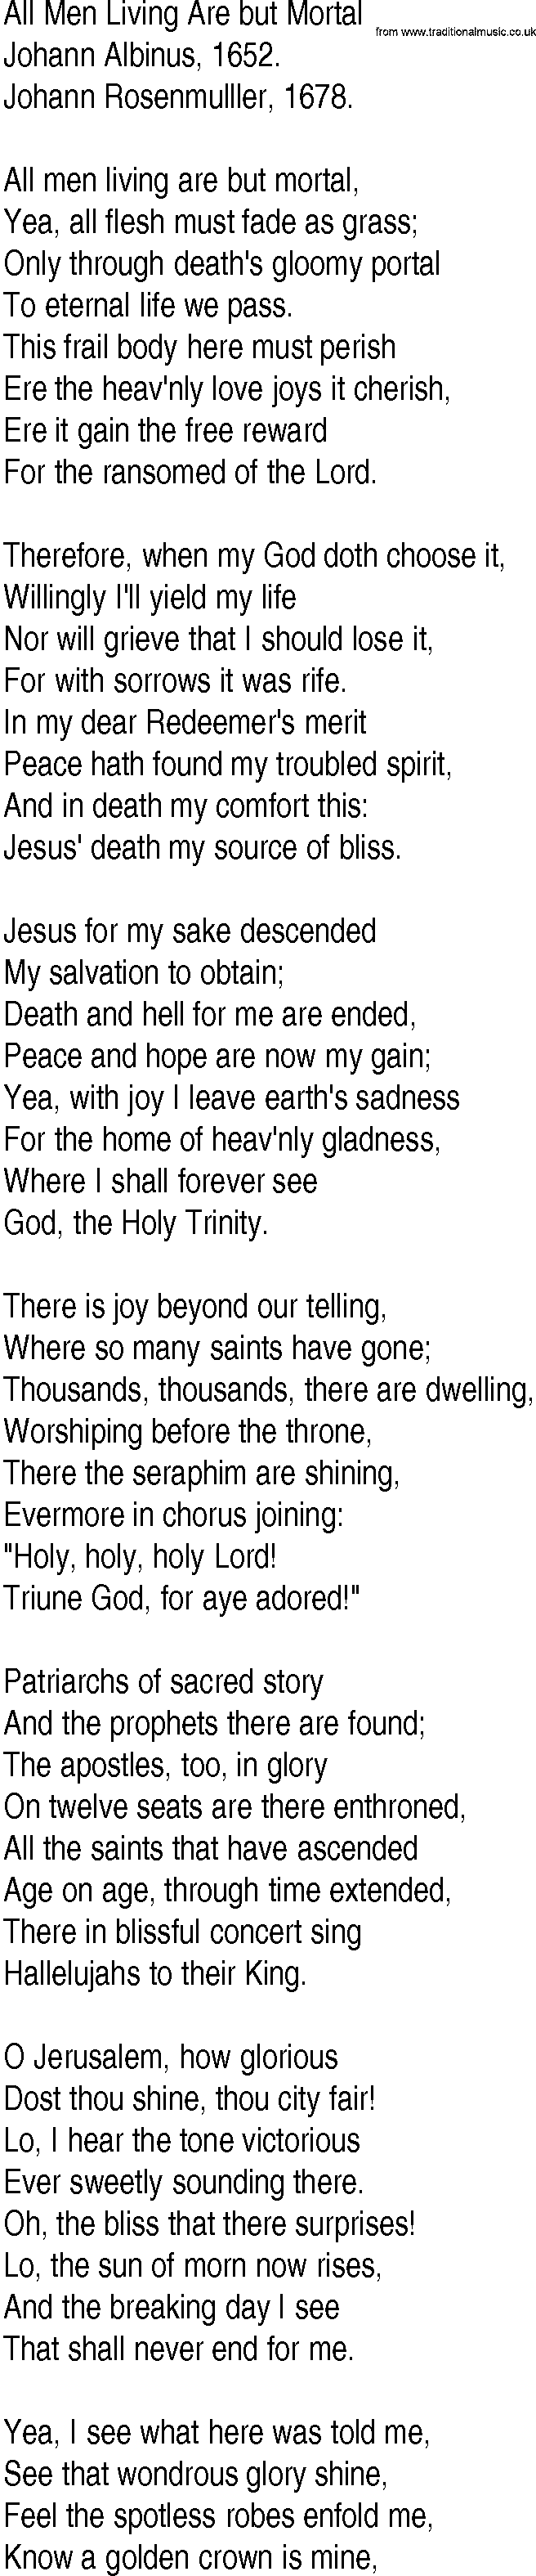 Hymn and Gospel Song: All Men Living Are but Mortal by Johann Albinus lyrics